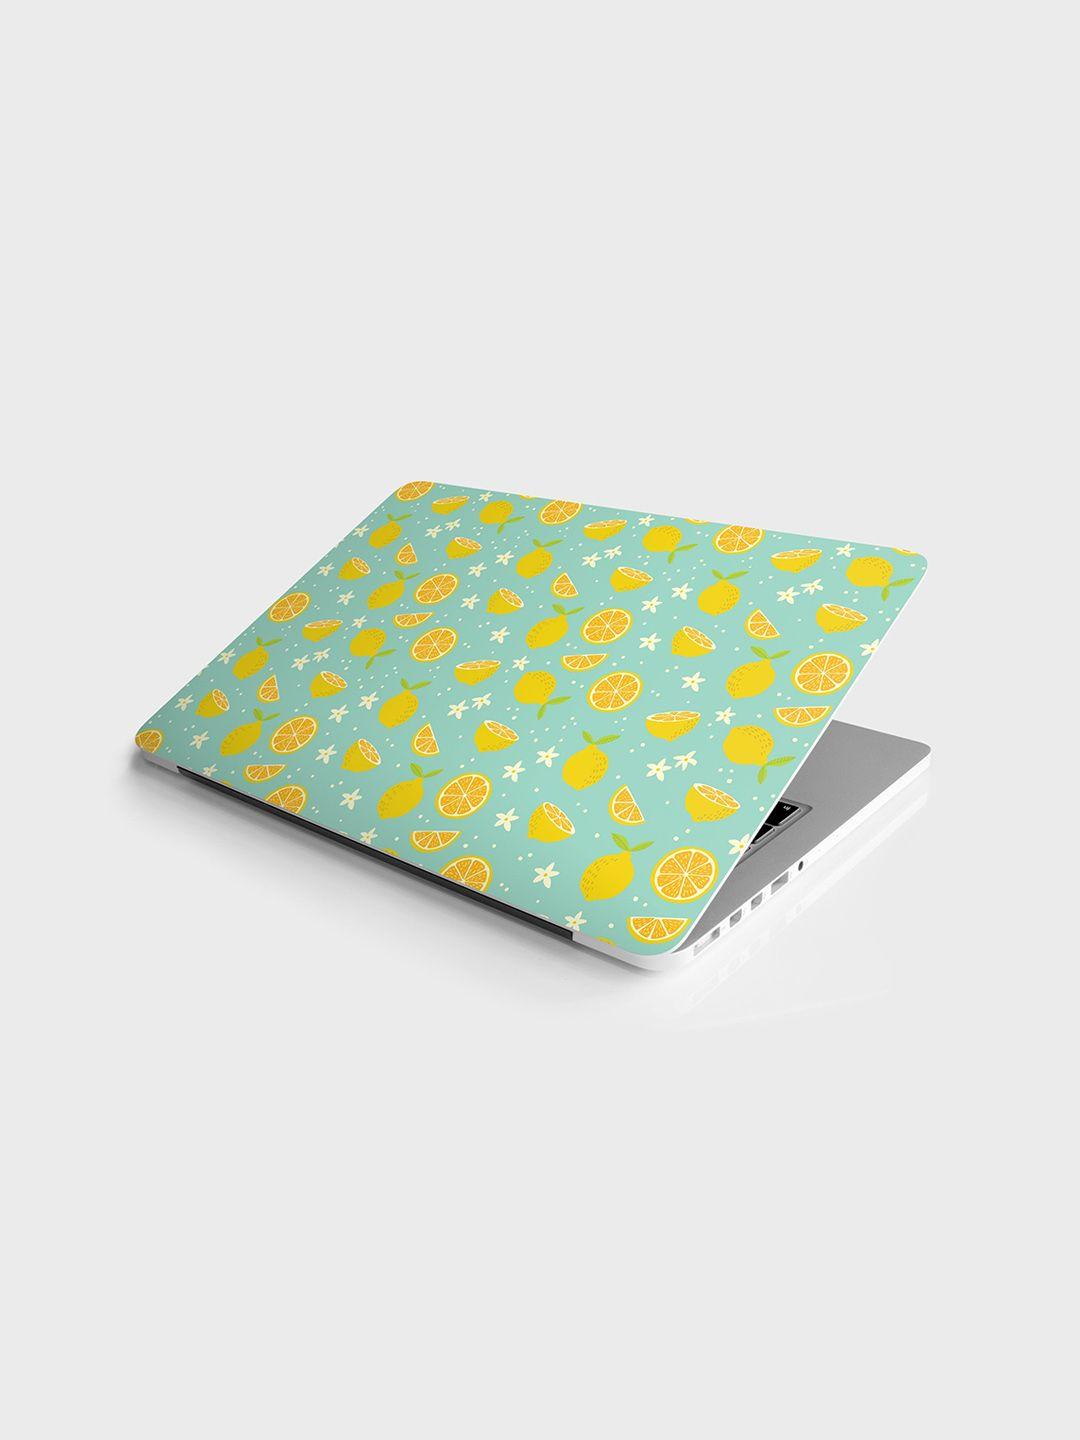 happywagon lemon slice laptop skin